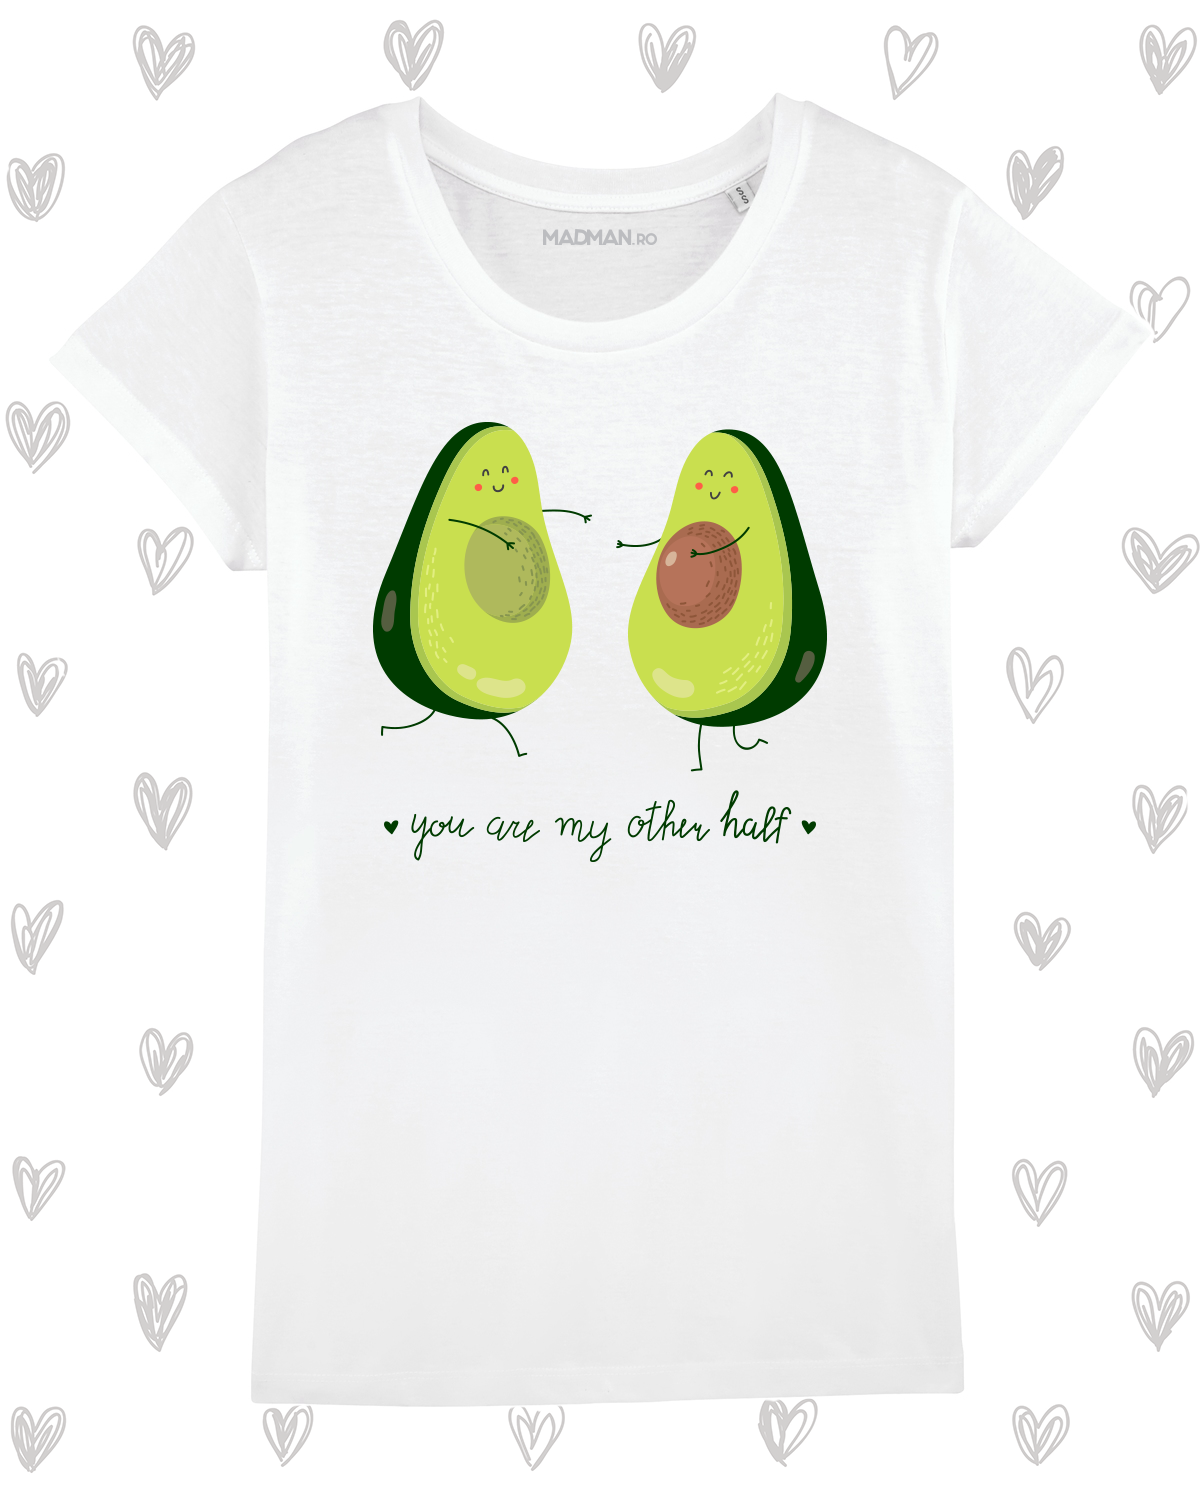 Avocado love - MADMAN